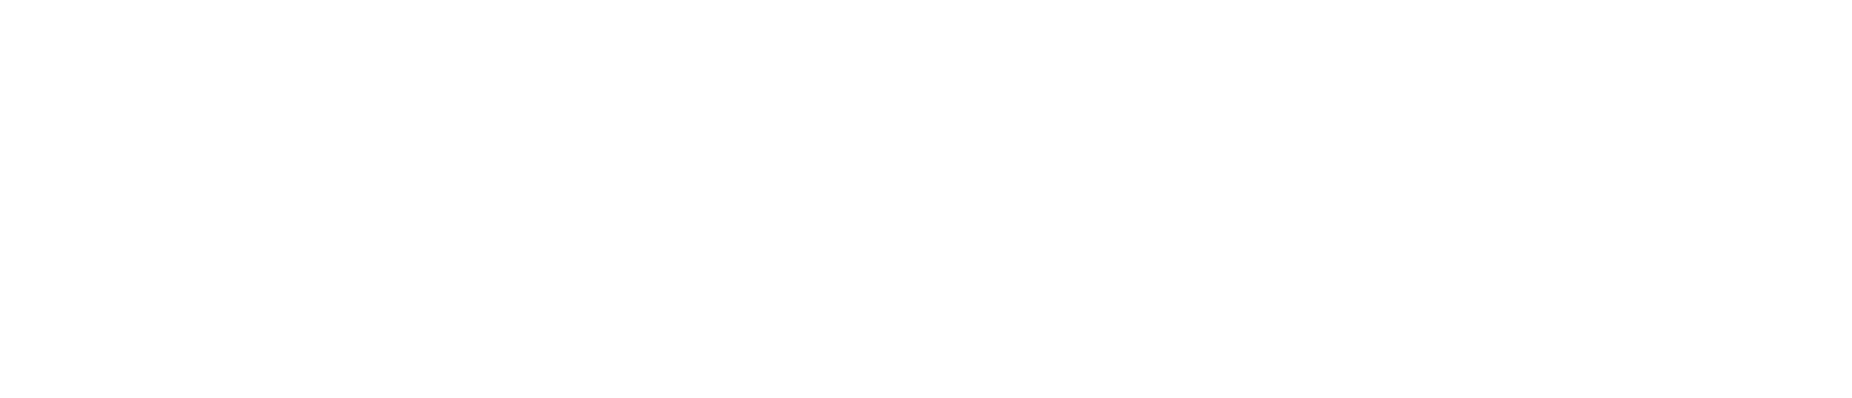 NED Çiçekli Proje Logosu